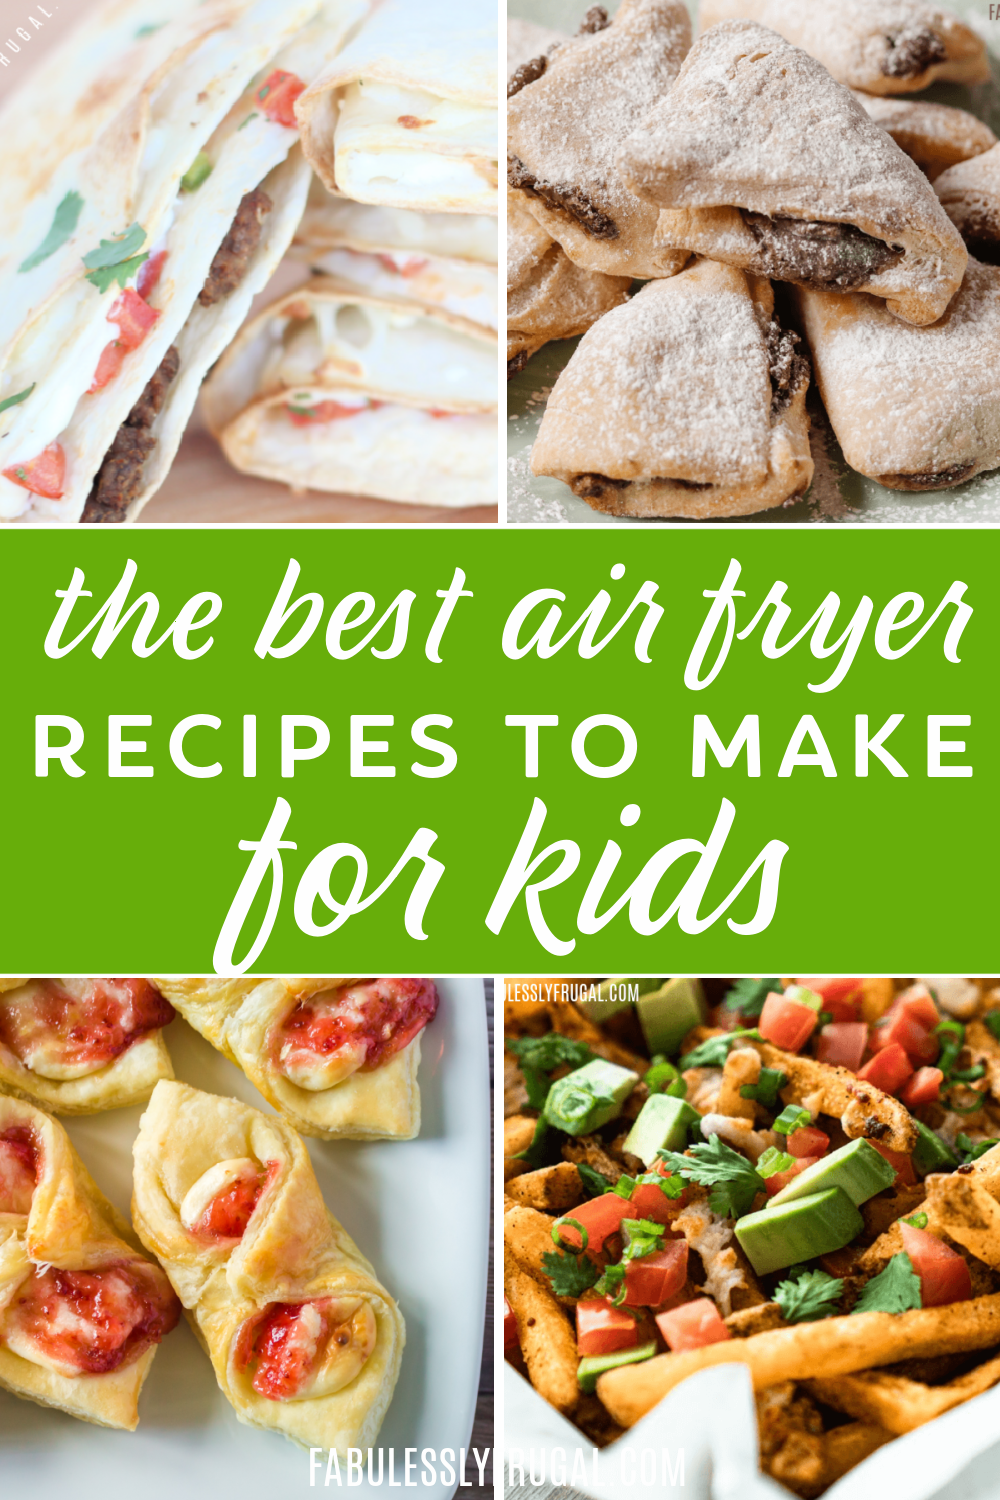 60+ Best Kid Friendly Air Fryer Recipes